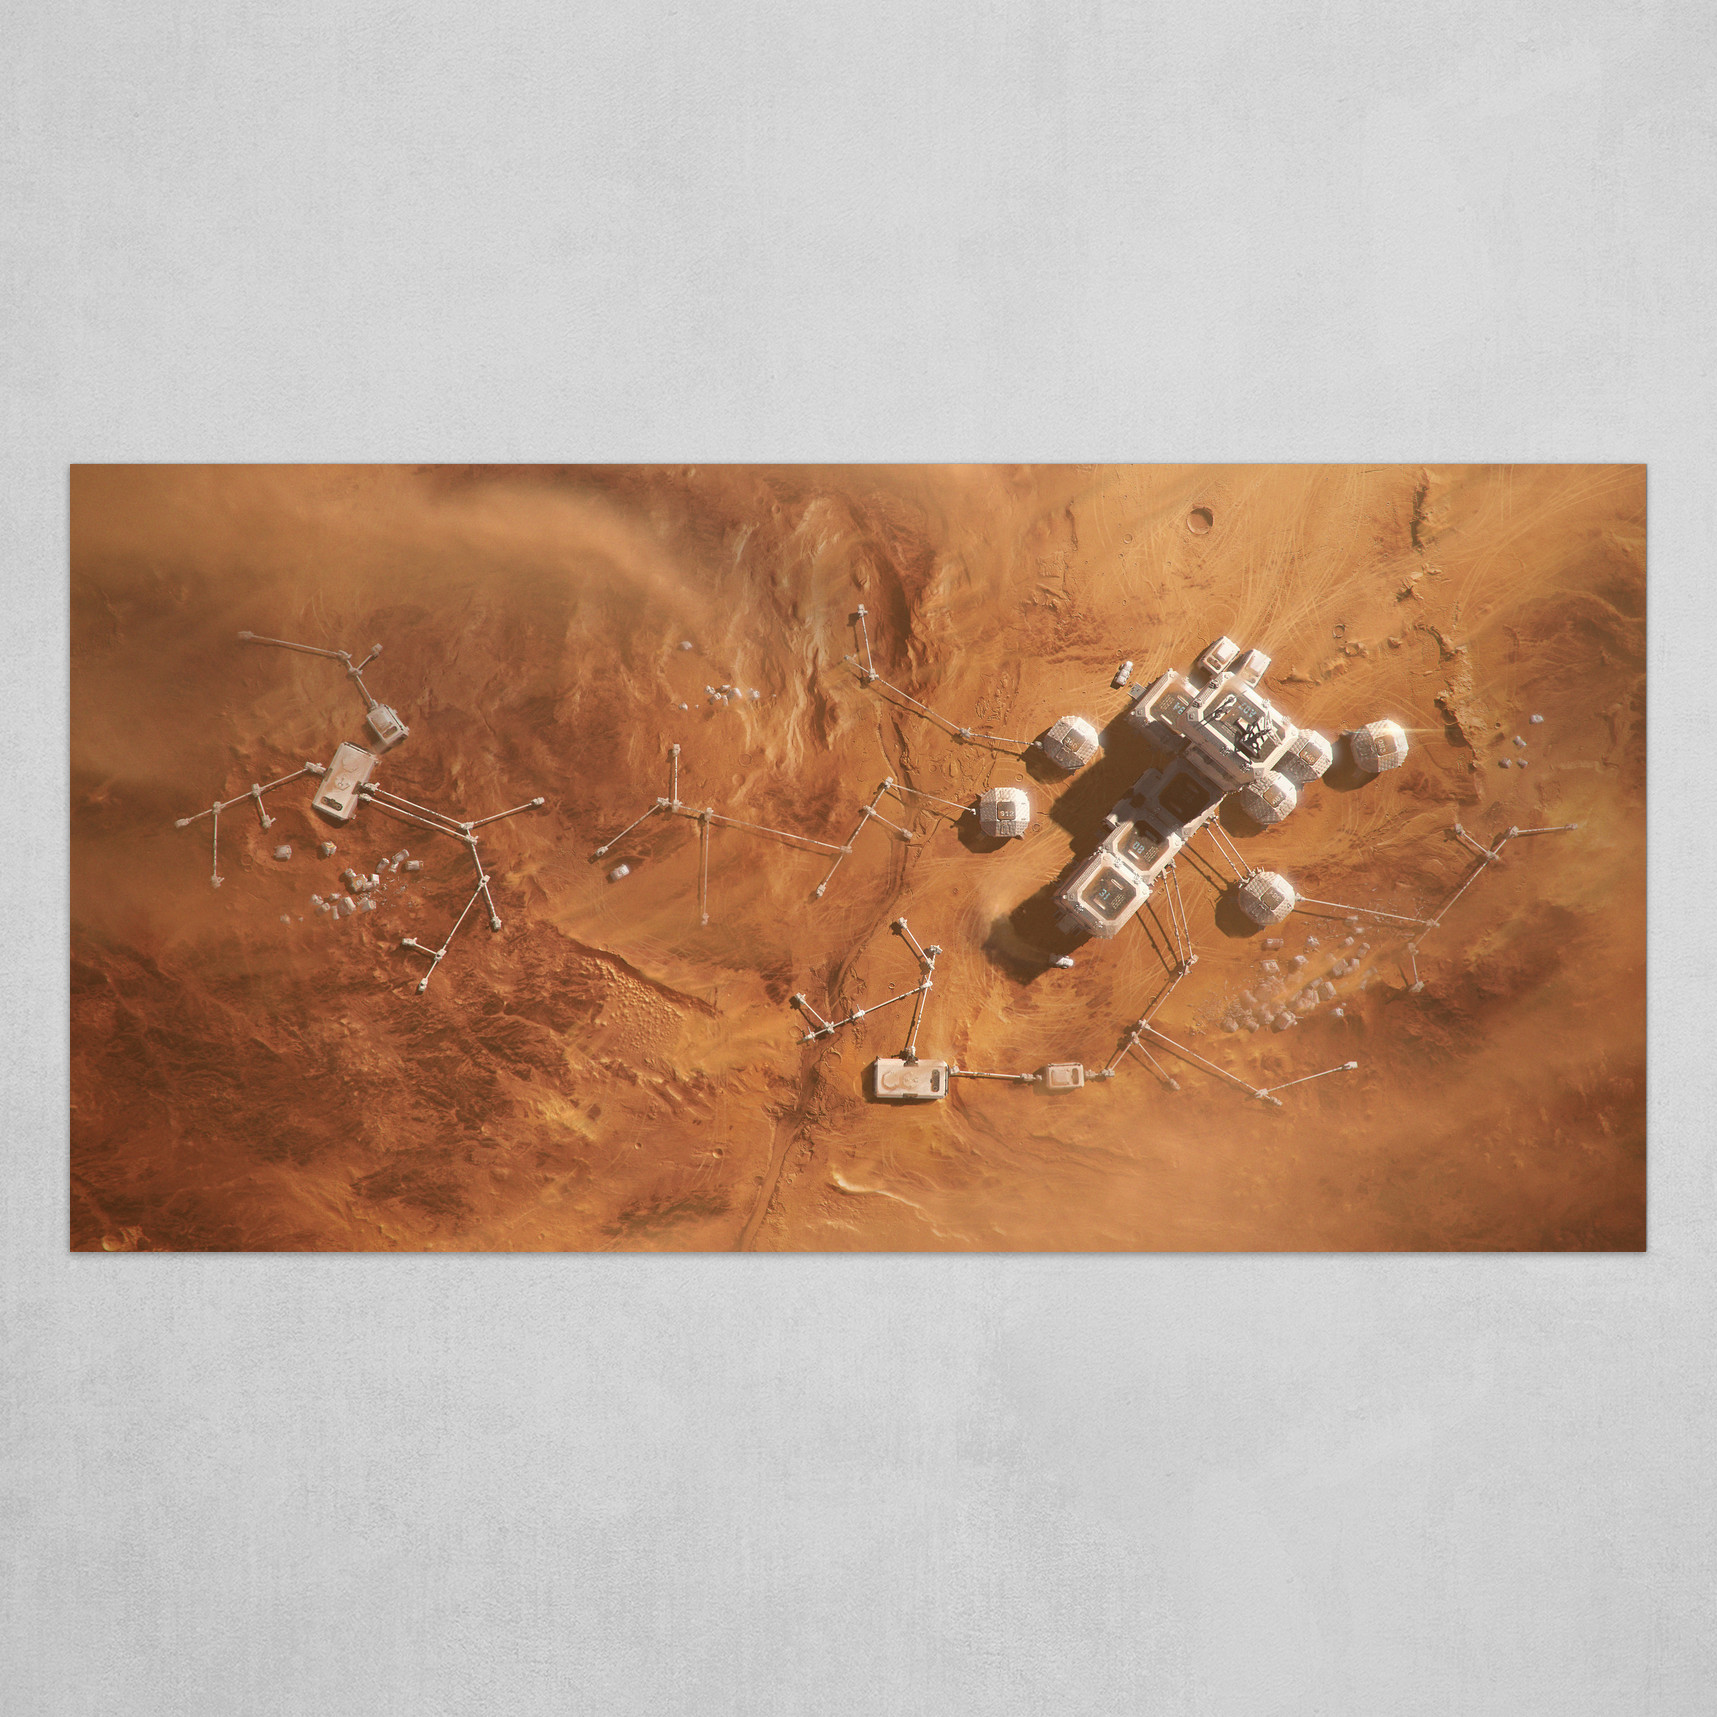 SOL 081 / Martian Base